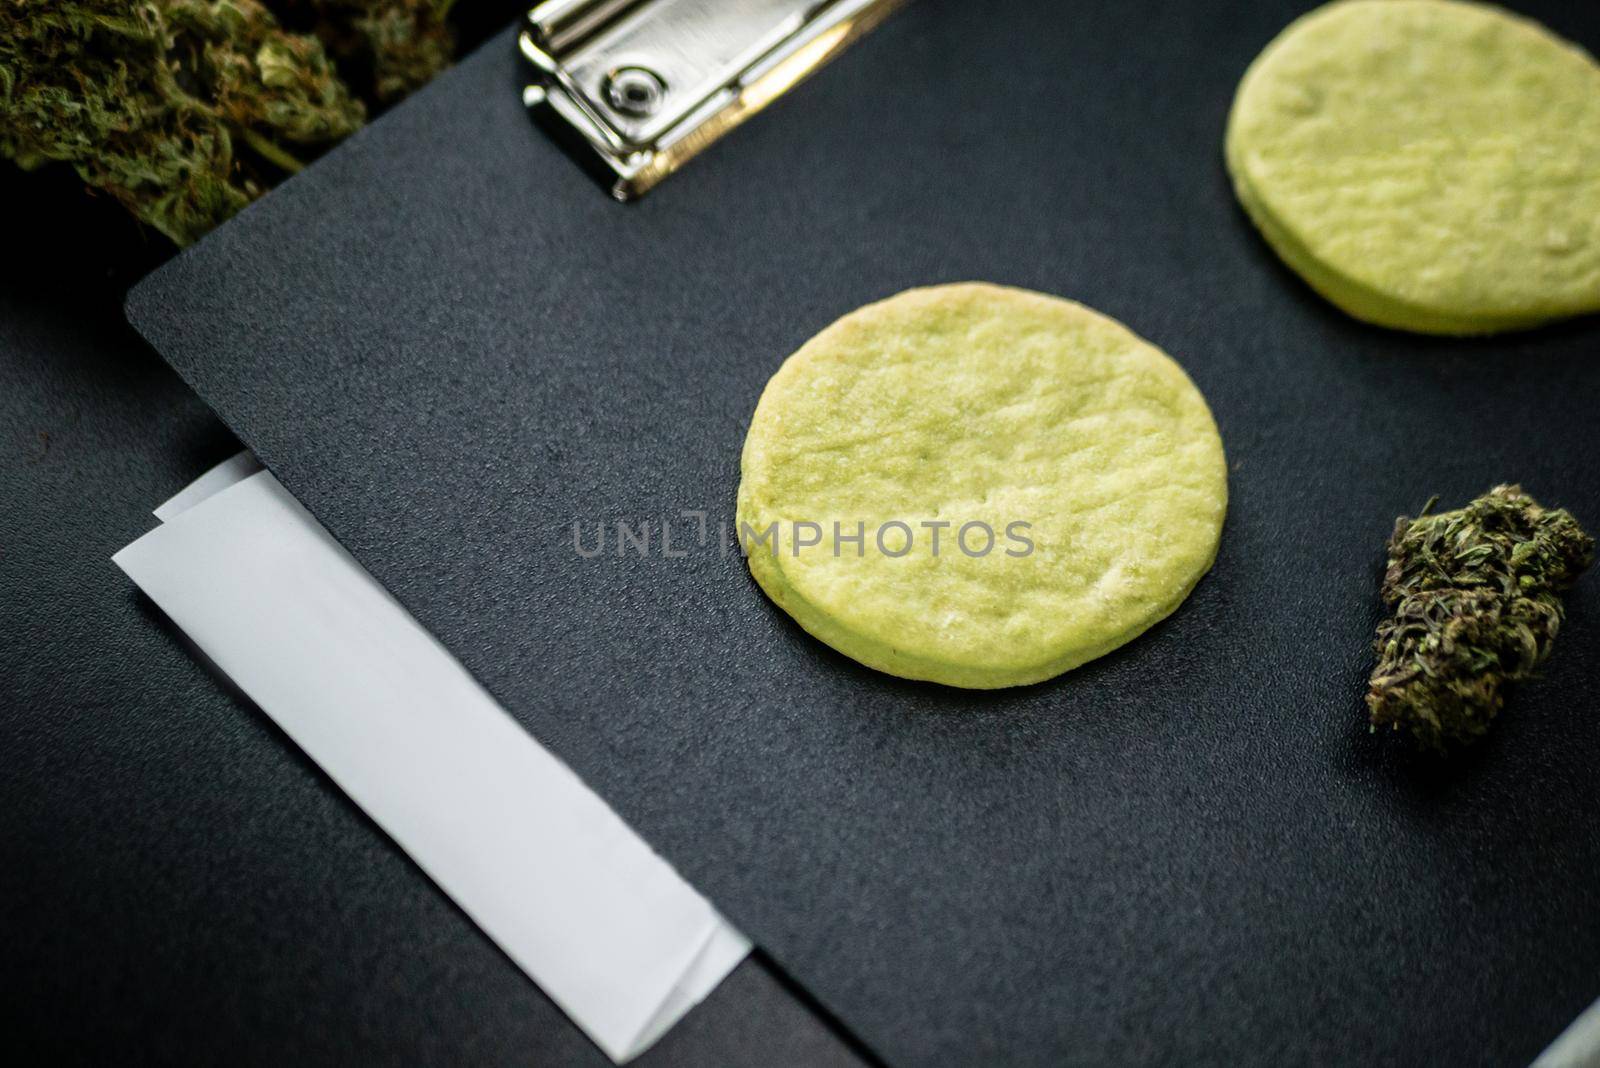 the marijuana cookies on a dark background